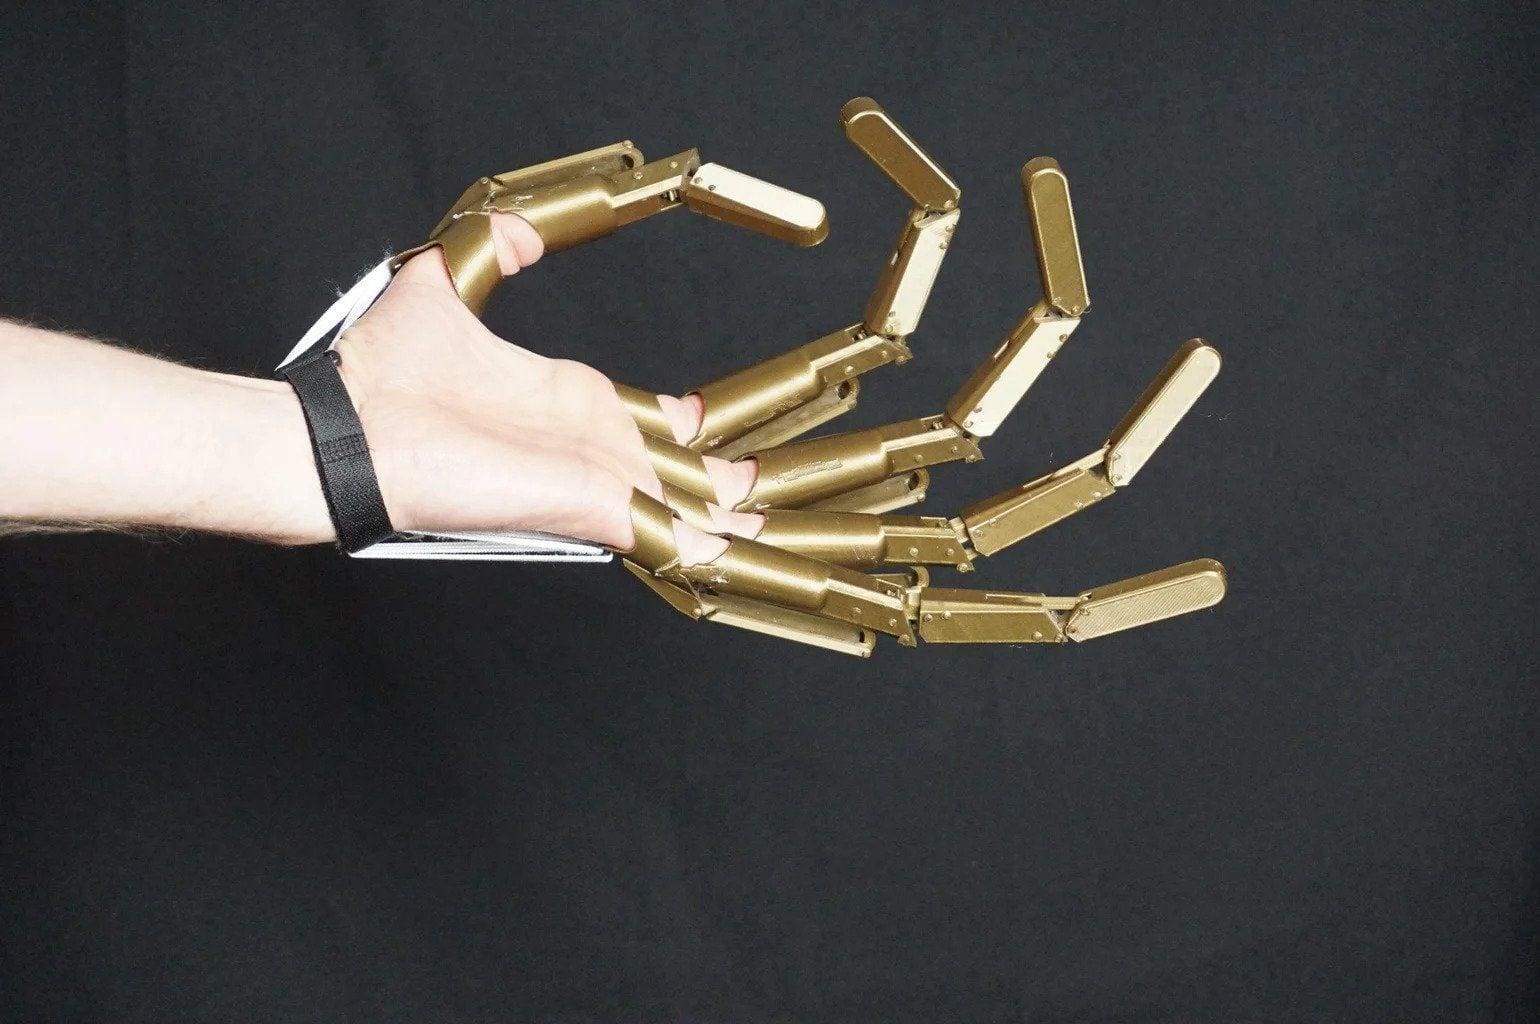 3D Printed finger | FutureTechVerse